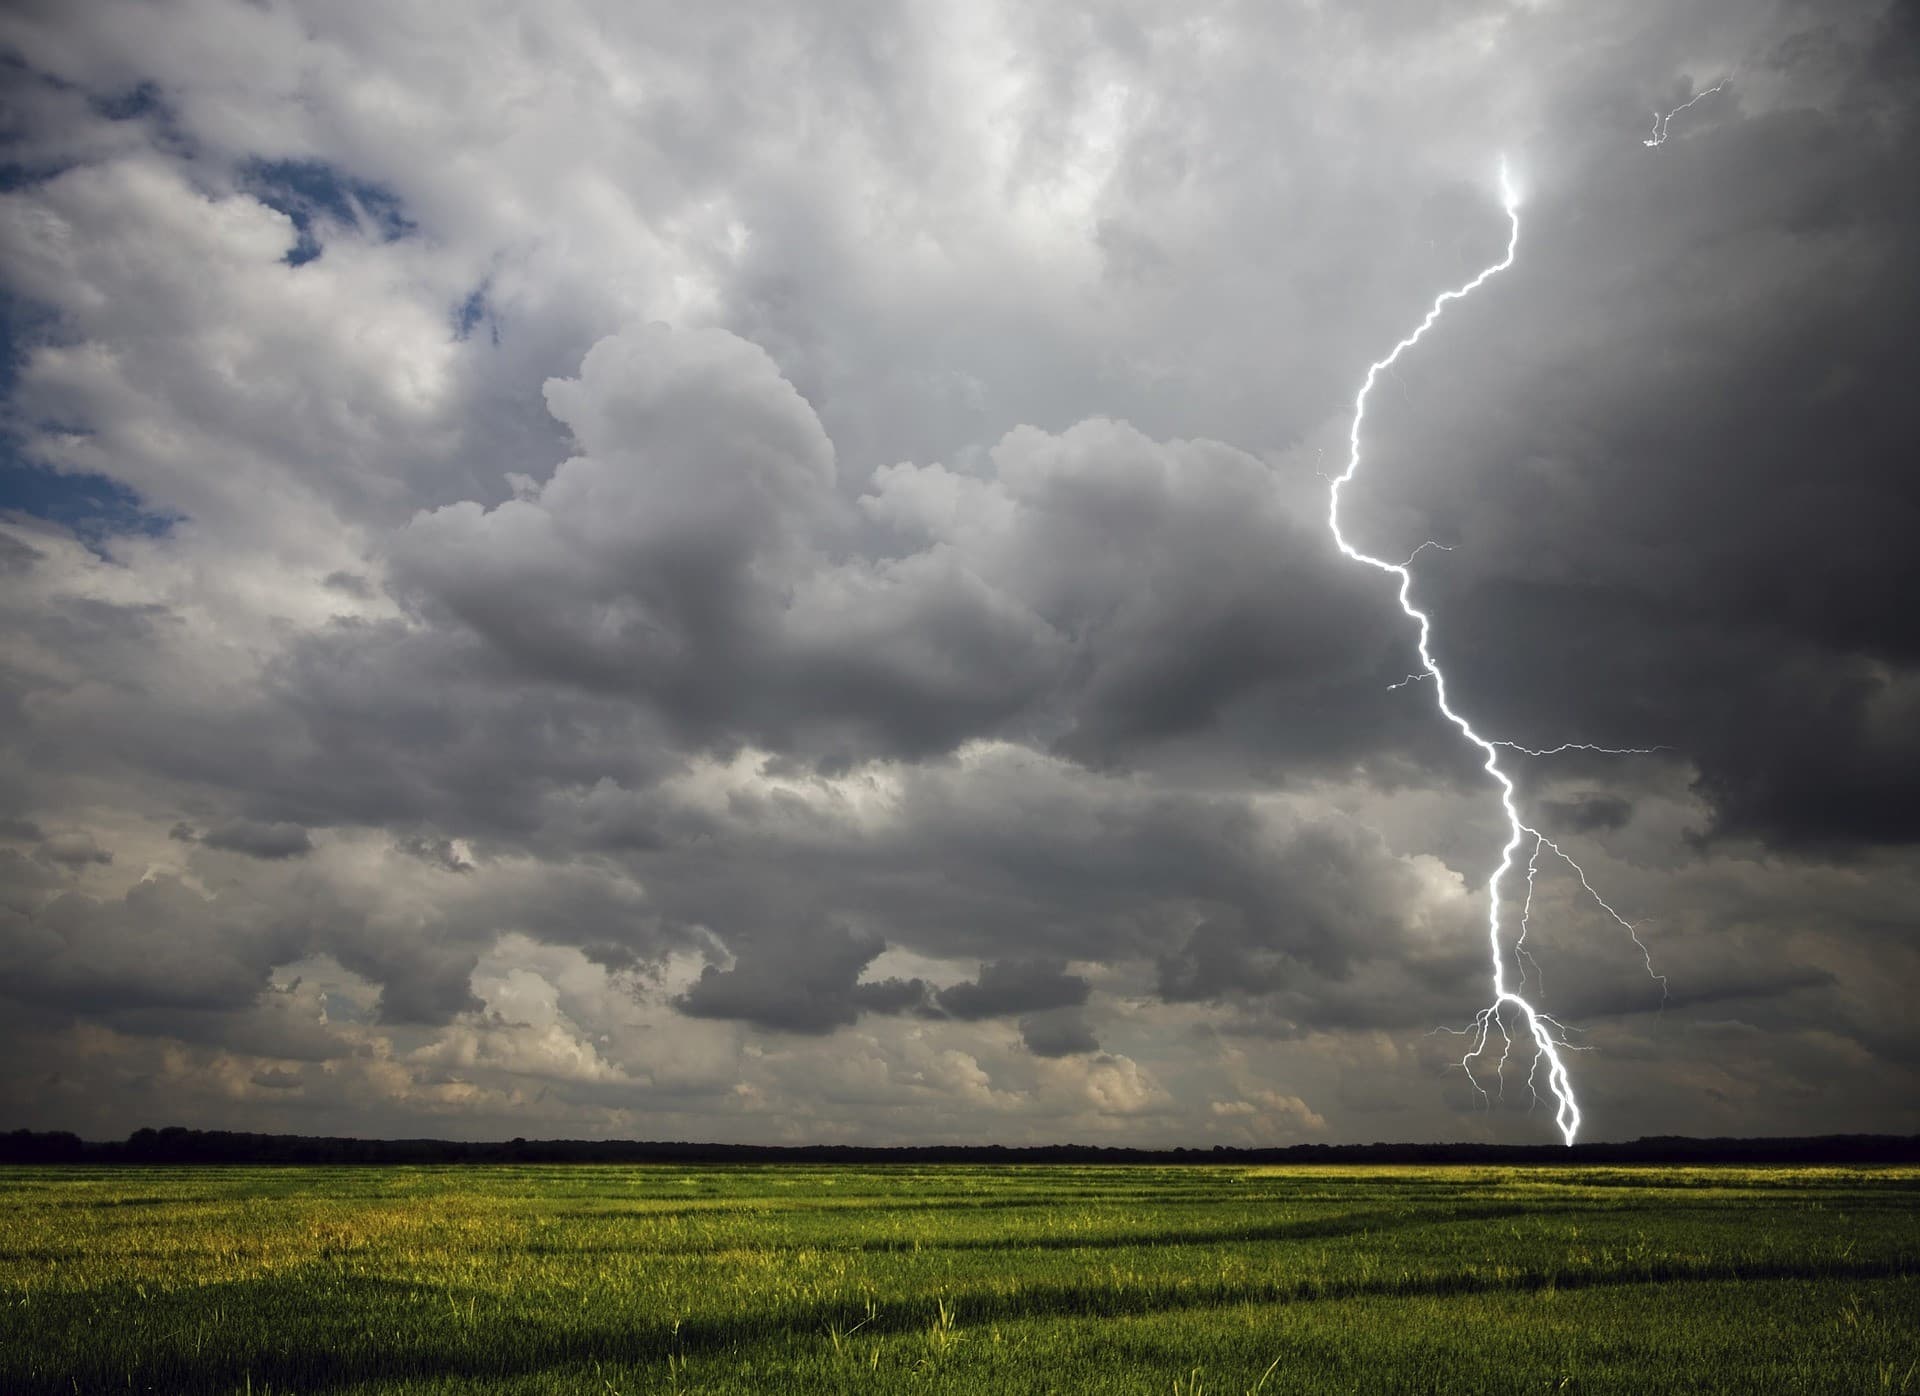 Lightning striking a field